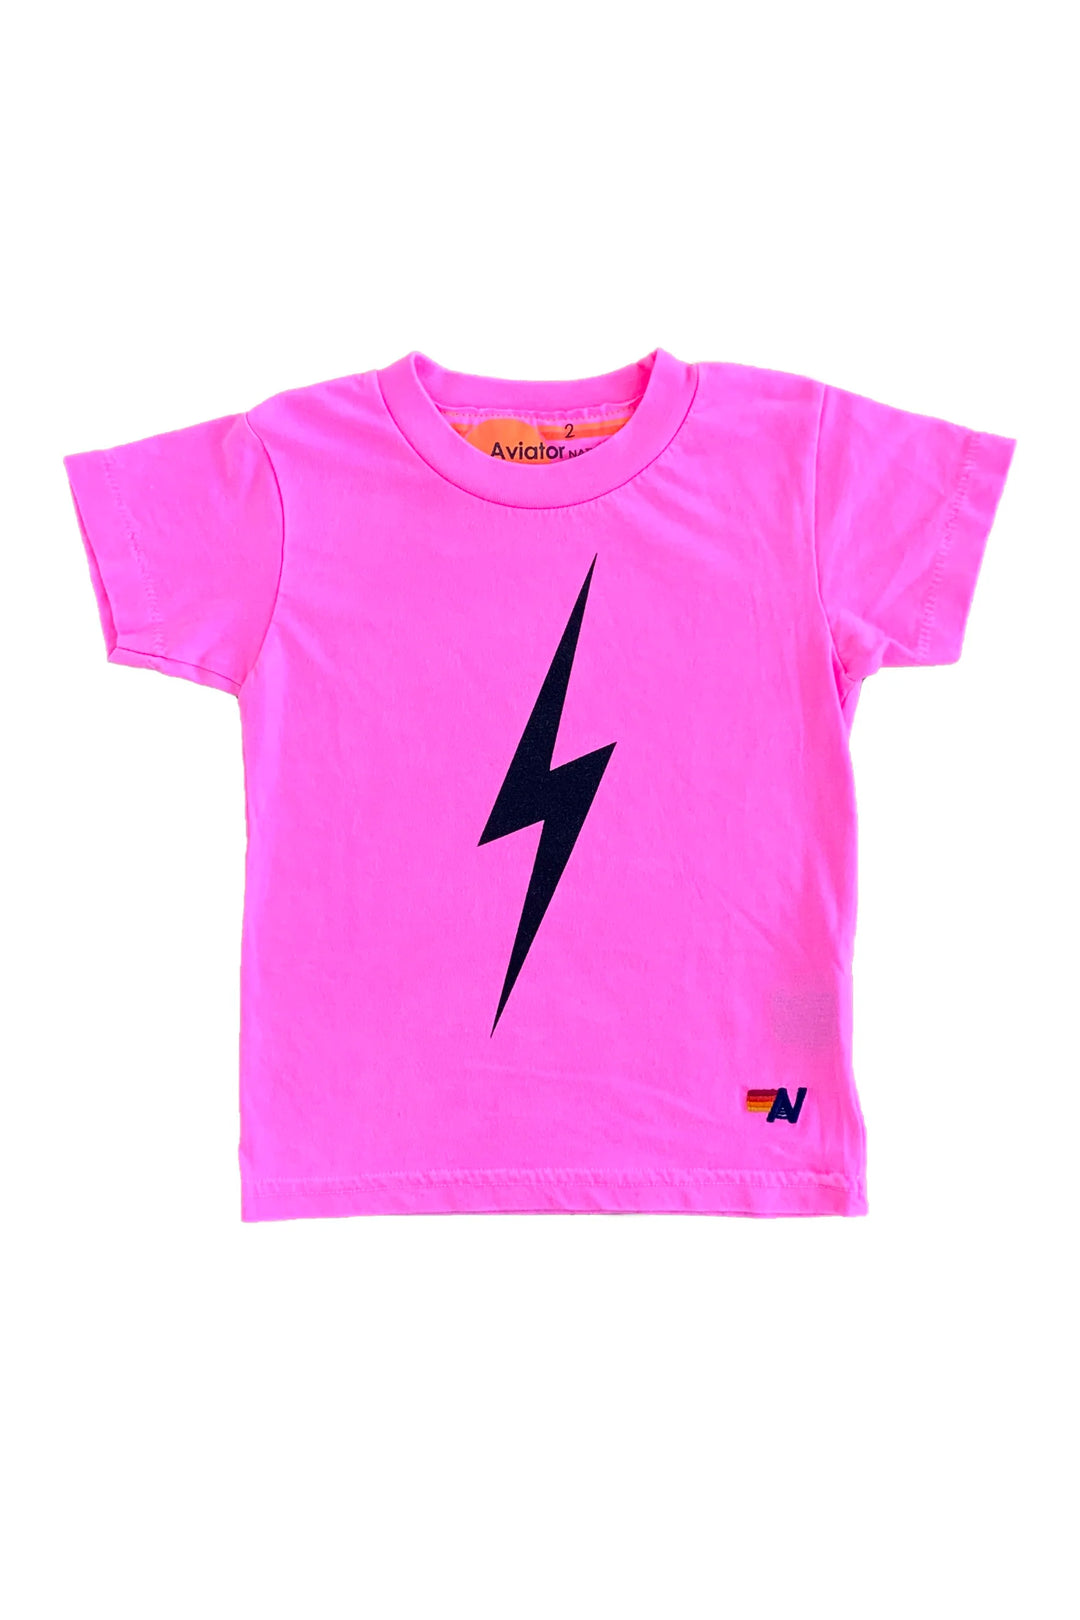 Aviator Nation Kid's Bolt Tee - Neon Pink